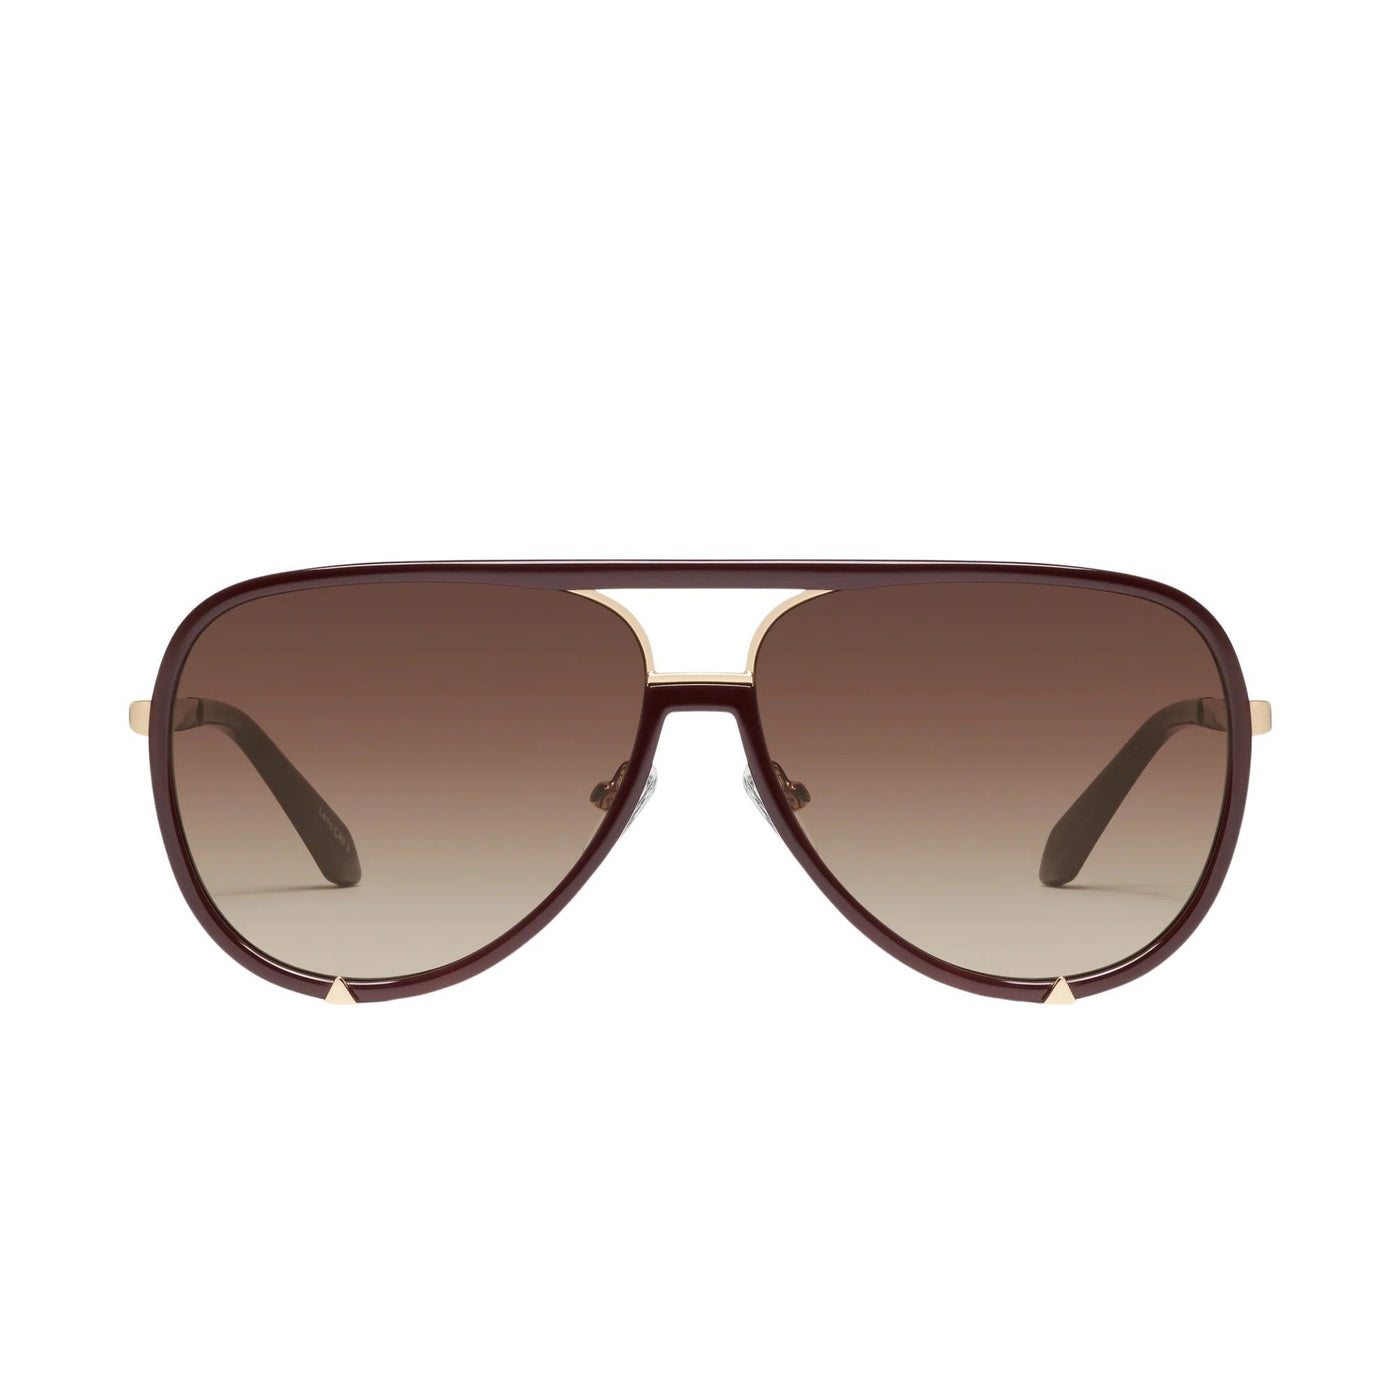 Quay Women's Coffee Run Oversized Round Cat Eye Sunglasses - Espresso Frame/Brown Lens - front